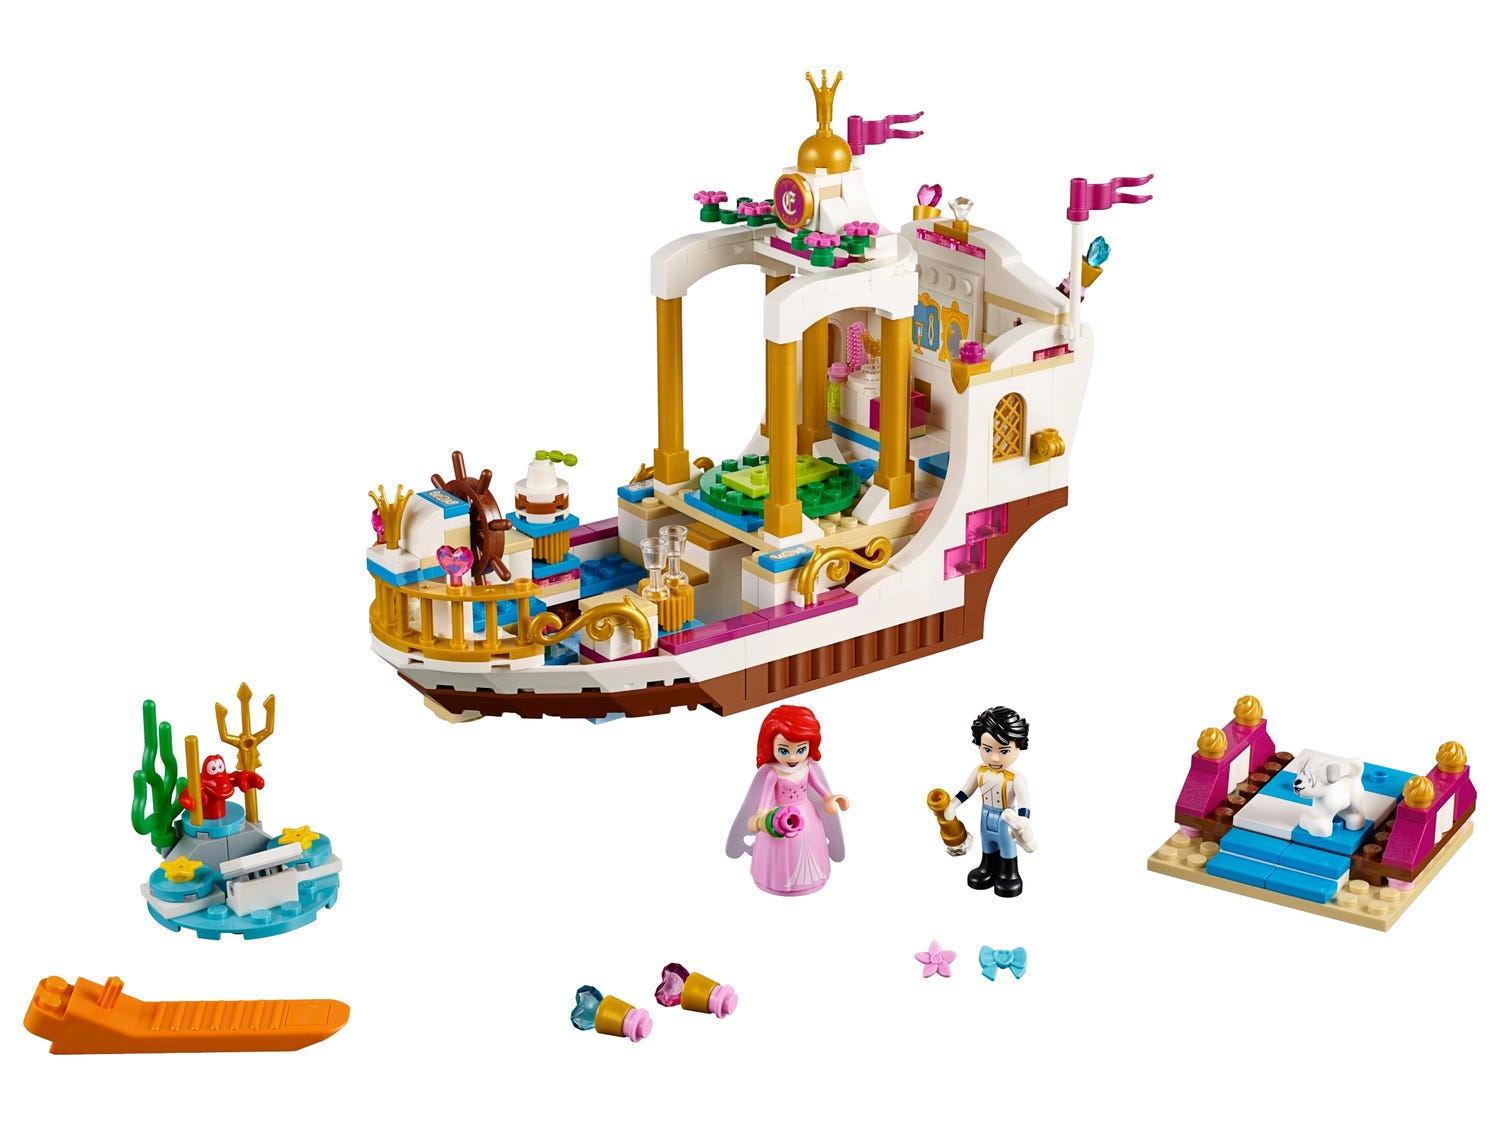 Ariel S Royal Celebration Boat 41153 Disney Buy Online At The